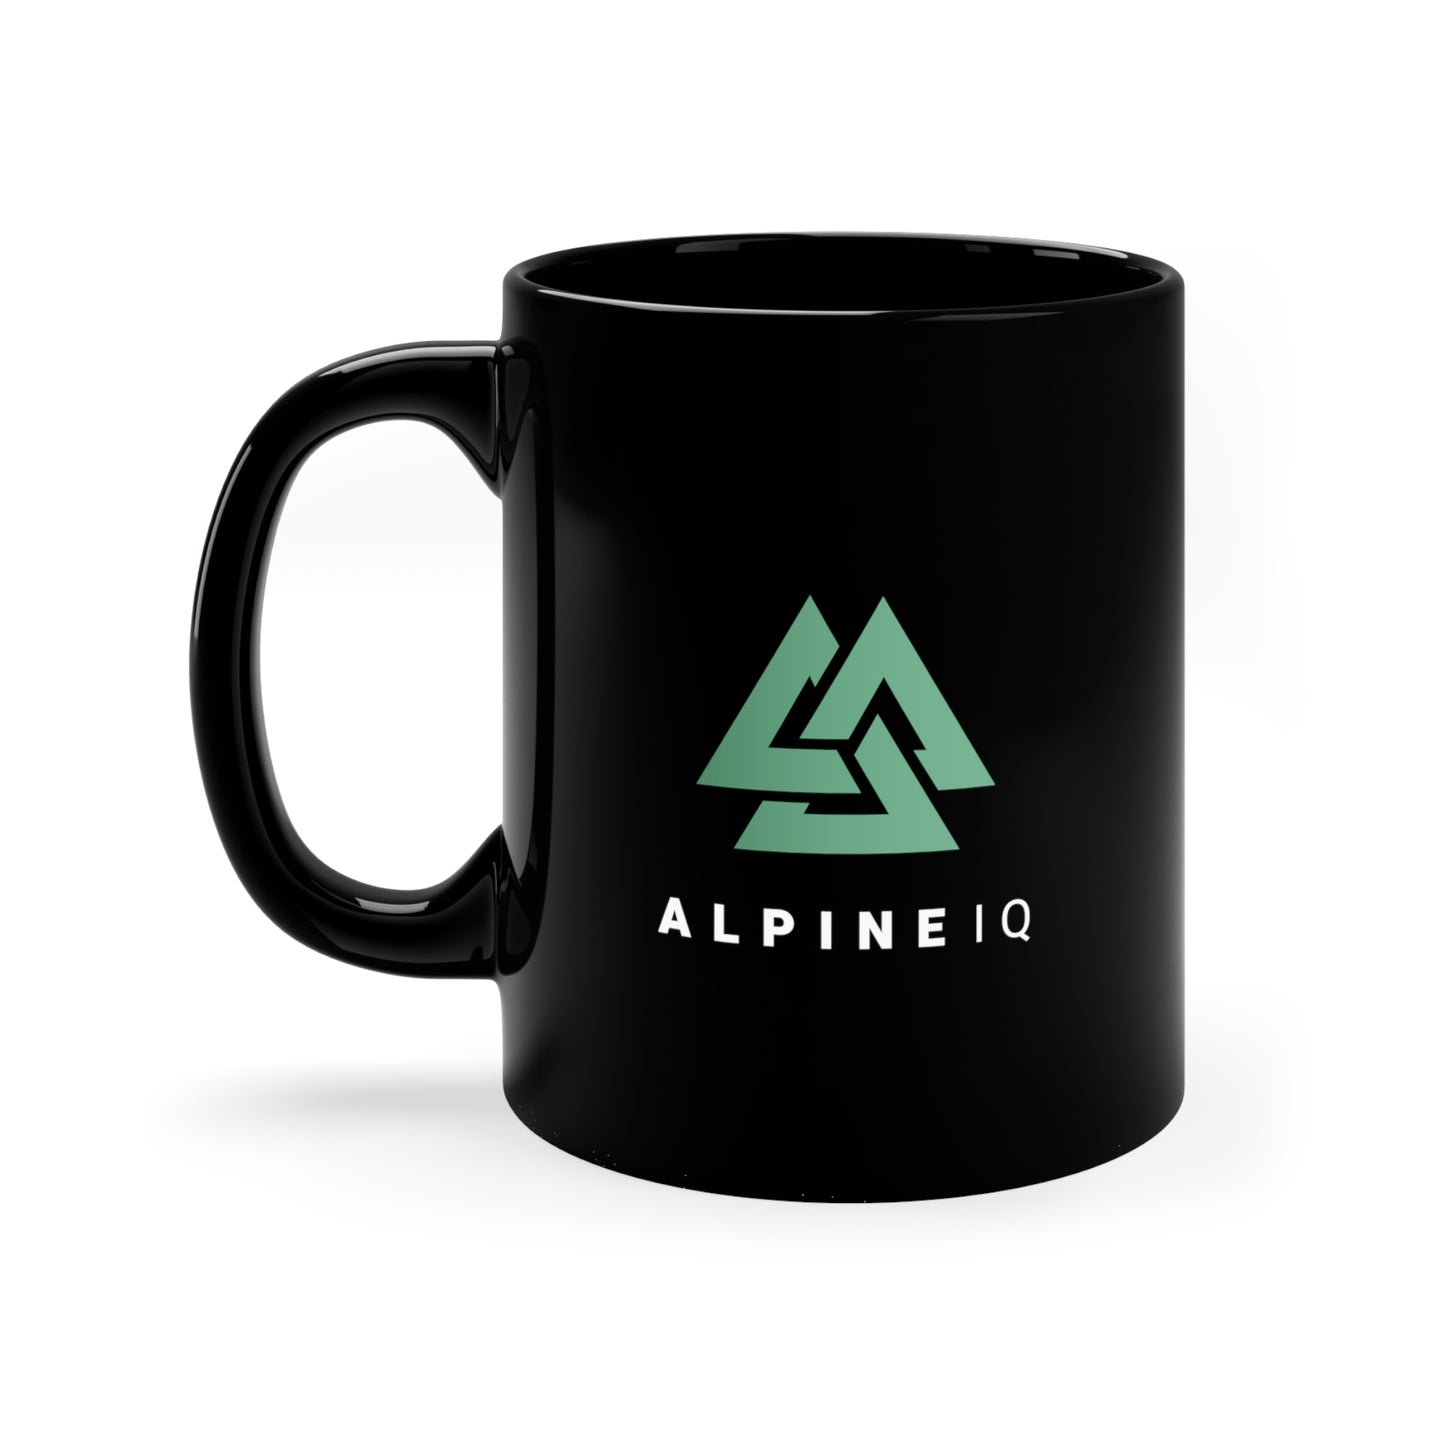 Alpine IQ Black Coffee Mug with Quote